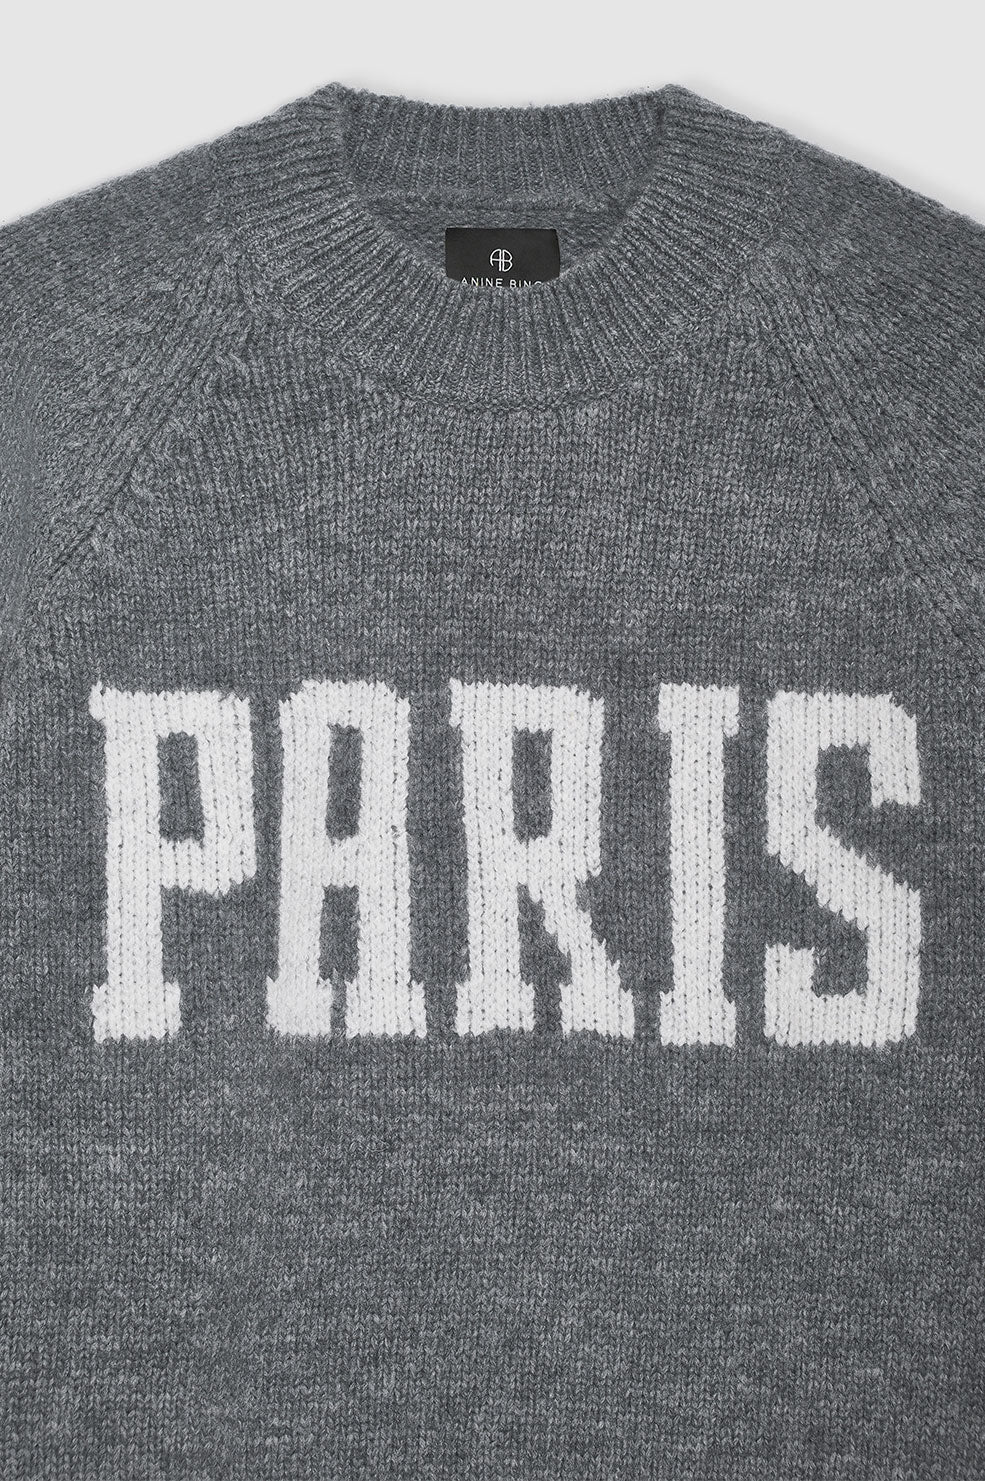 ANINE BING Kendrick Sweater University Paris - Charcoal - Detail View